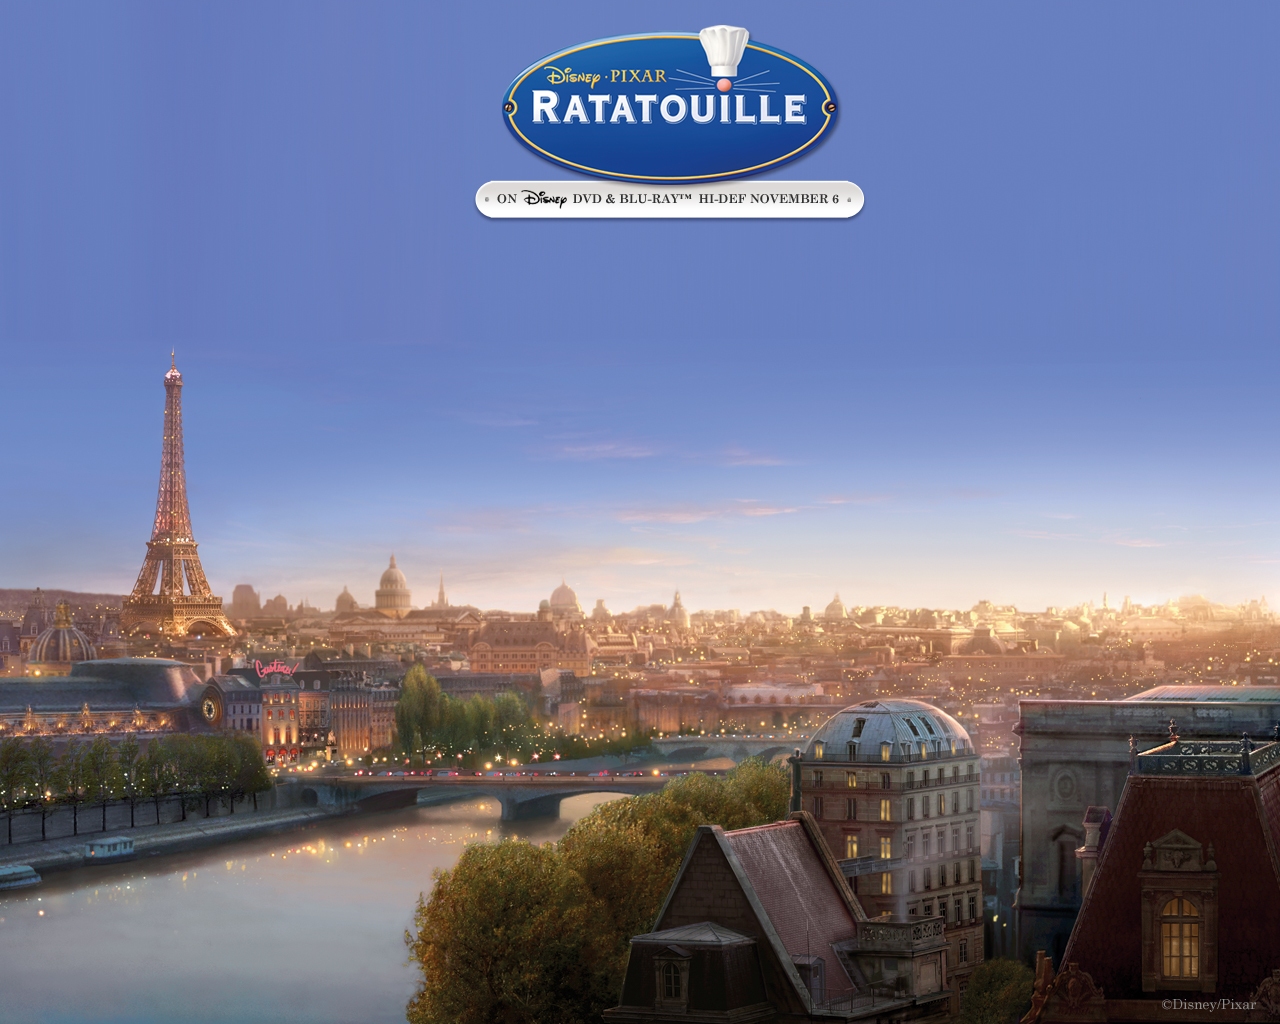 "Ratatouille" desktop wallpaper number 3 (1280 x 1024 pixels)